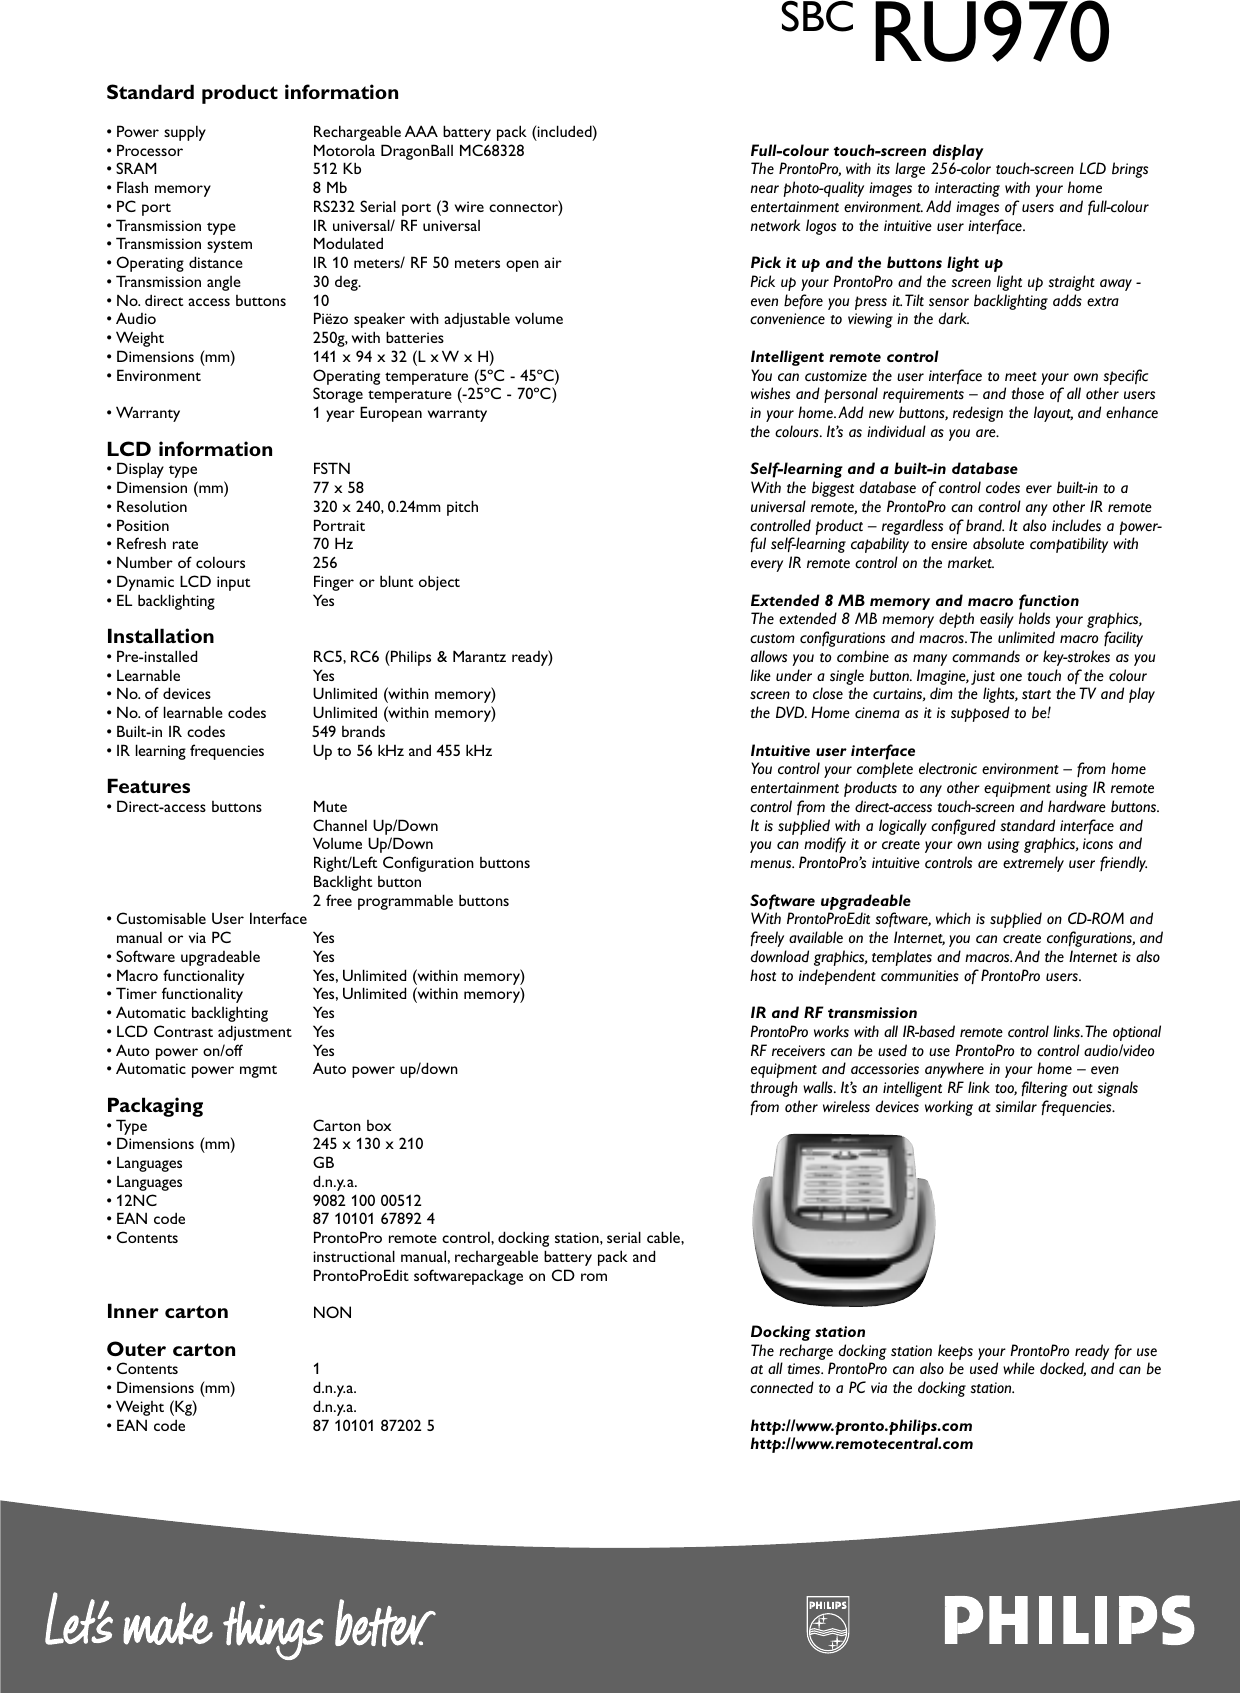 Page 2 of 2 - Philips Philips-Sbc-Ru970-Users-Manual- 5986 ENEN Leaflet SBC RU970  Philips-sbc-ru970-users-manual